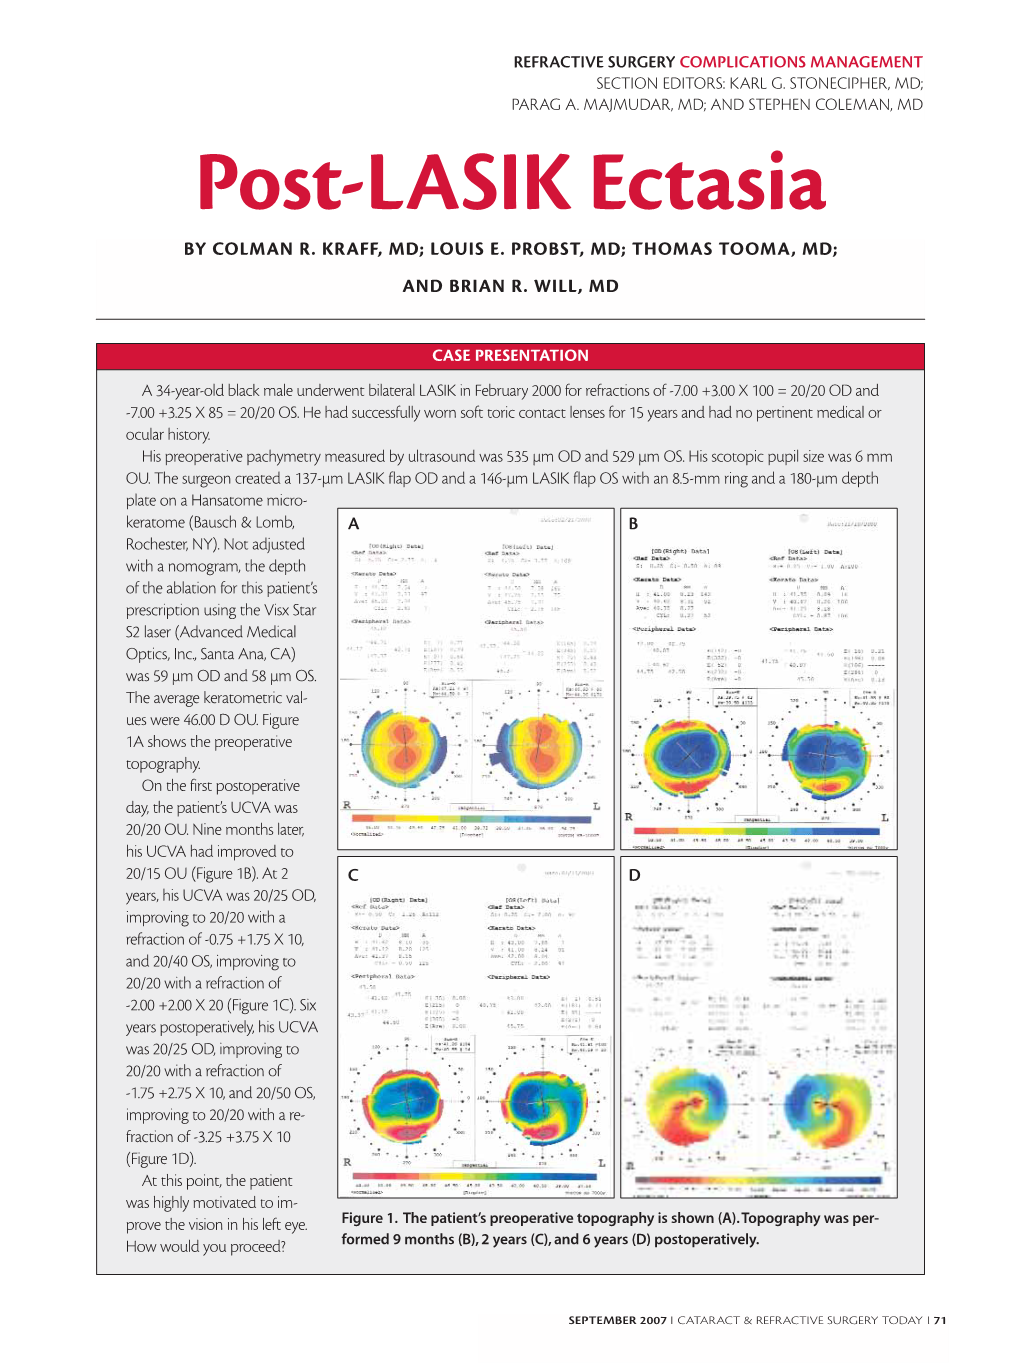 Post-LASIK Ectasia by COLMAN R